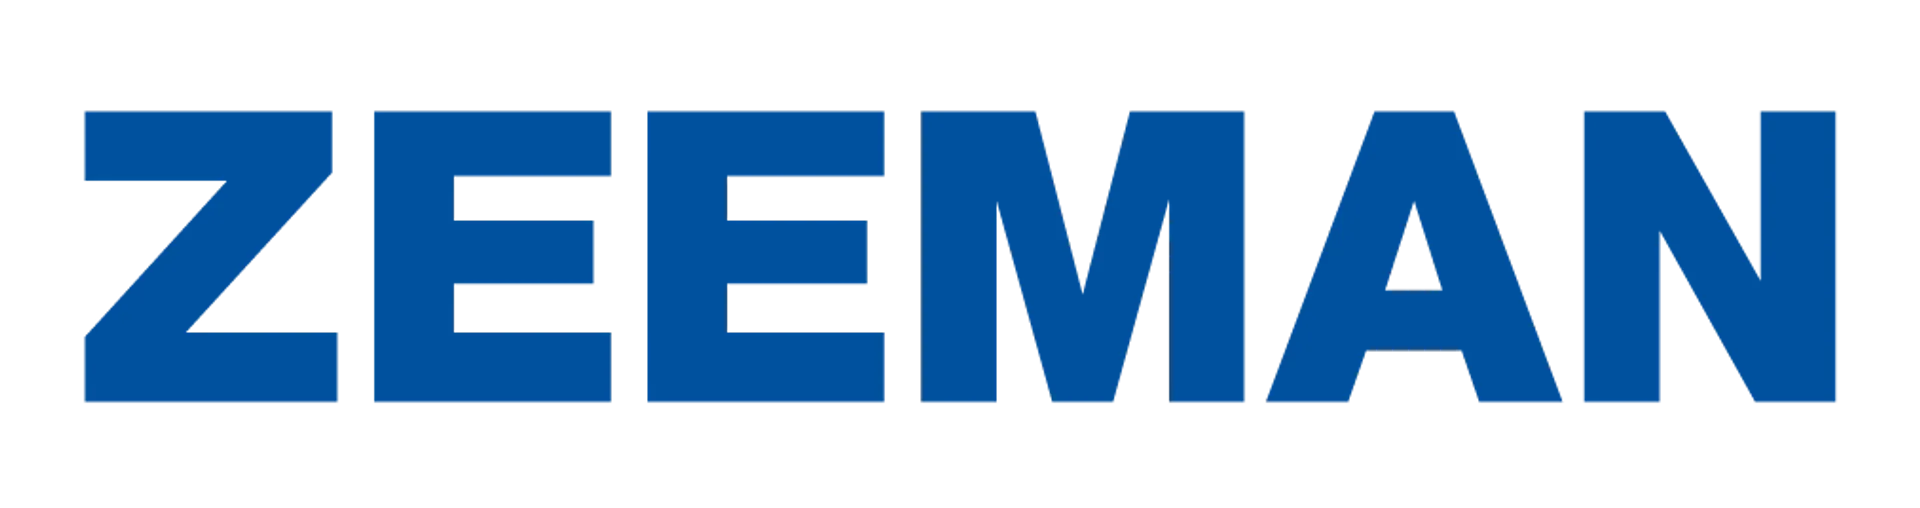 ZEEMAN logo die aktuell Flugblatt